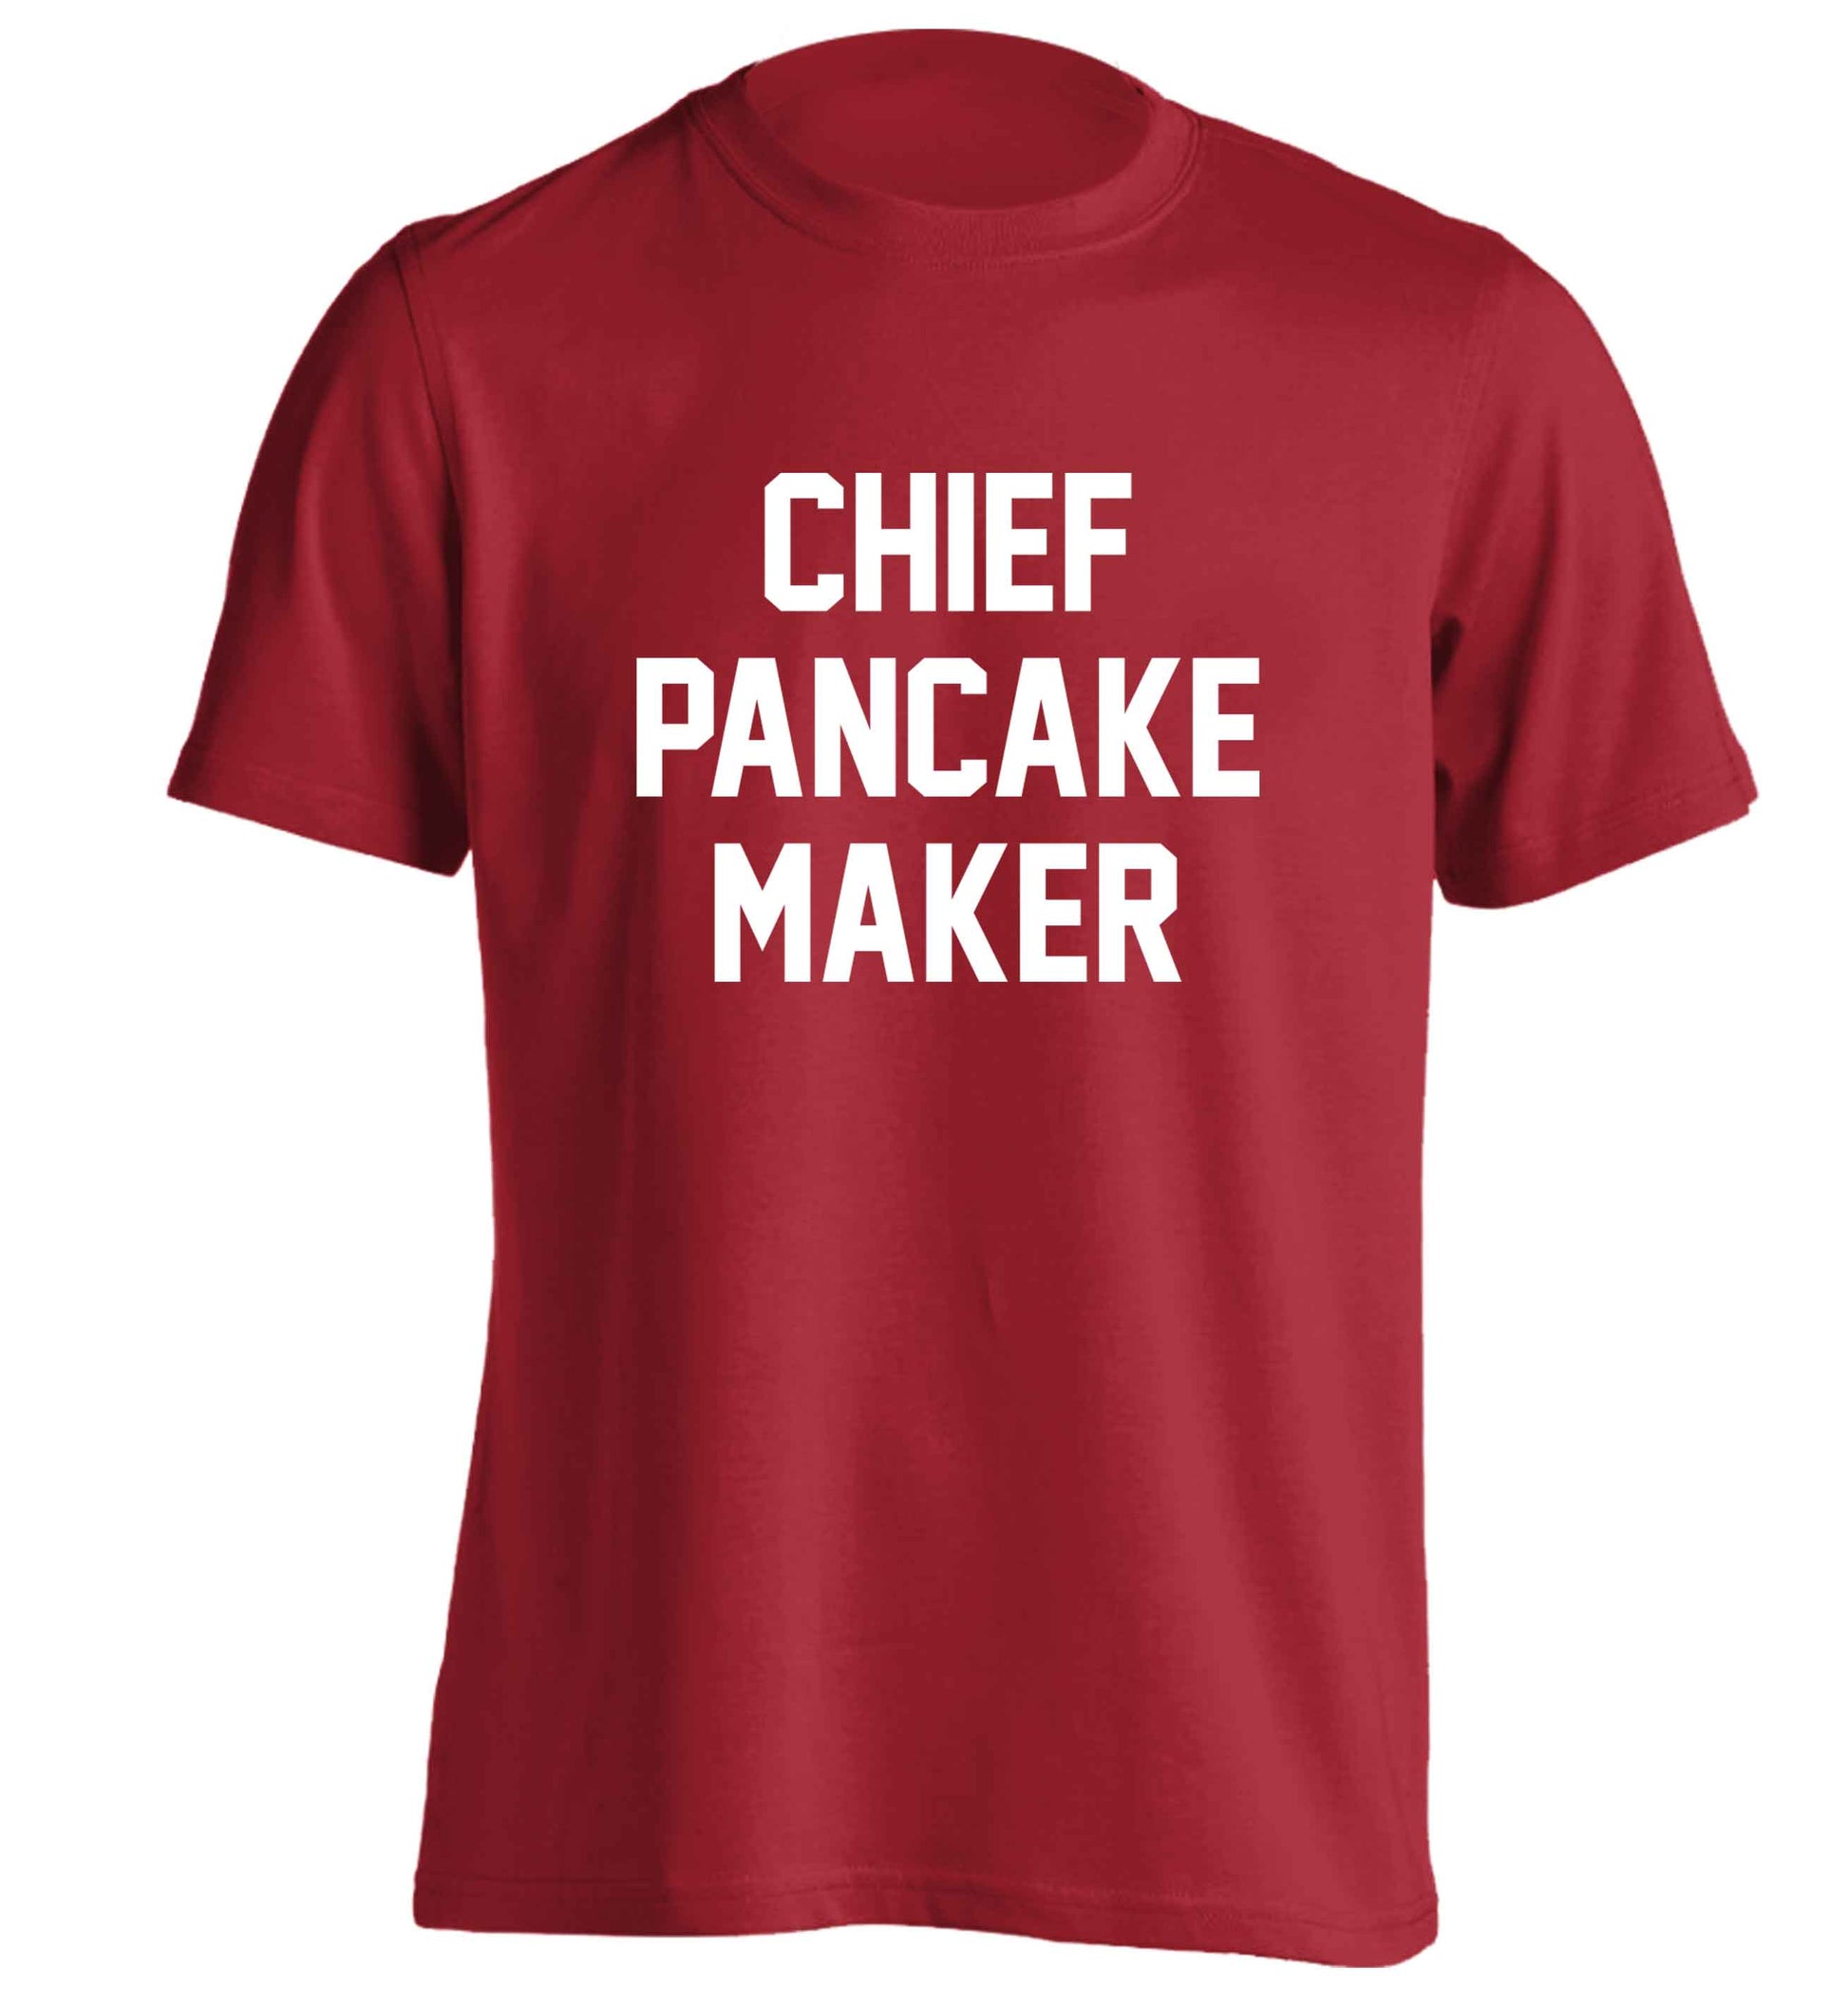 Chief pancake maker adults unisex red Tshirt 2XL